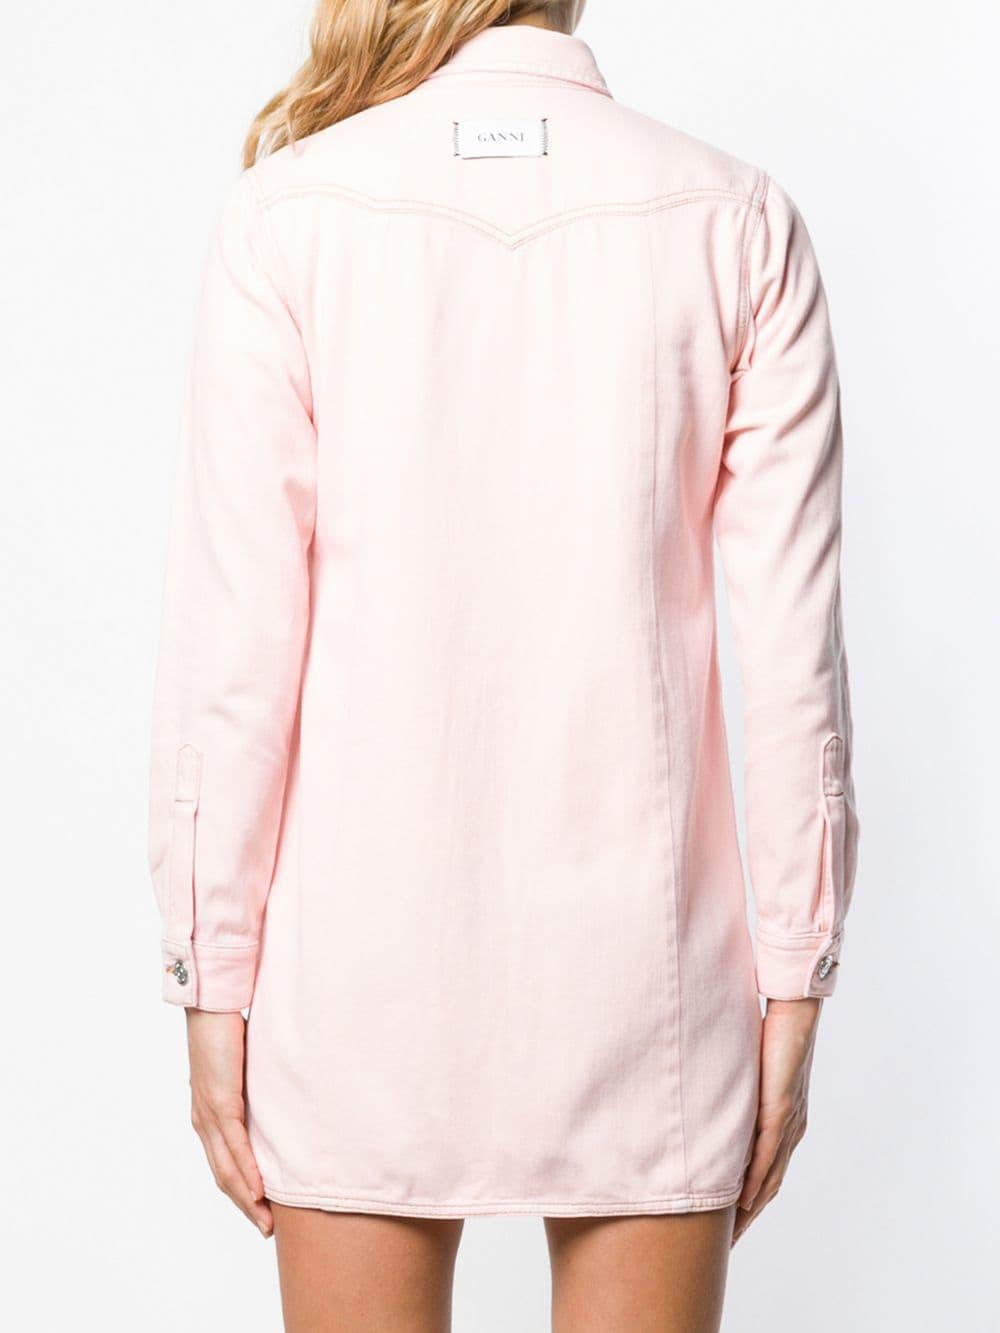 Ganni Denim Shirt Dress in Pink - Lyst